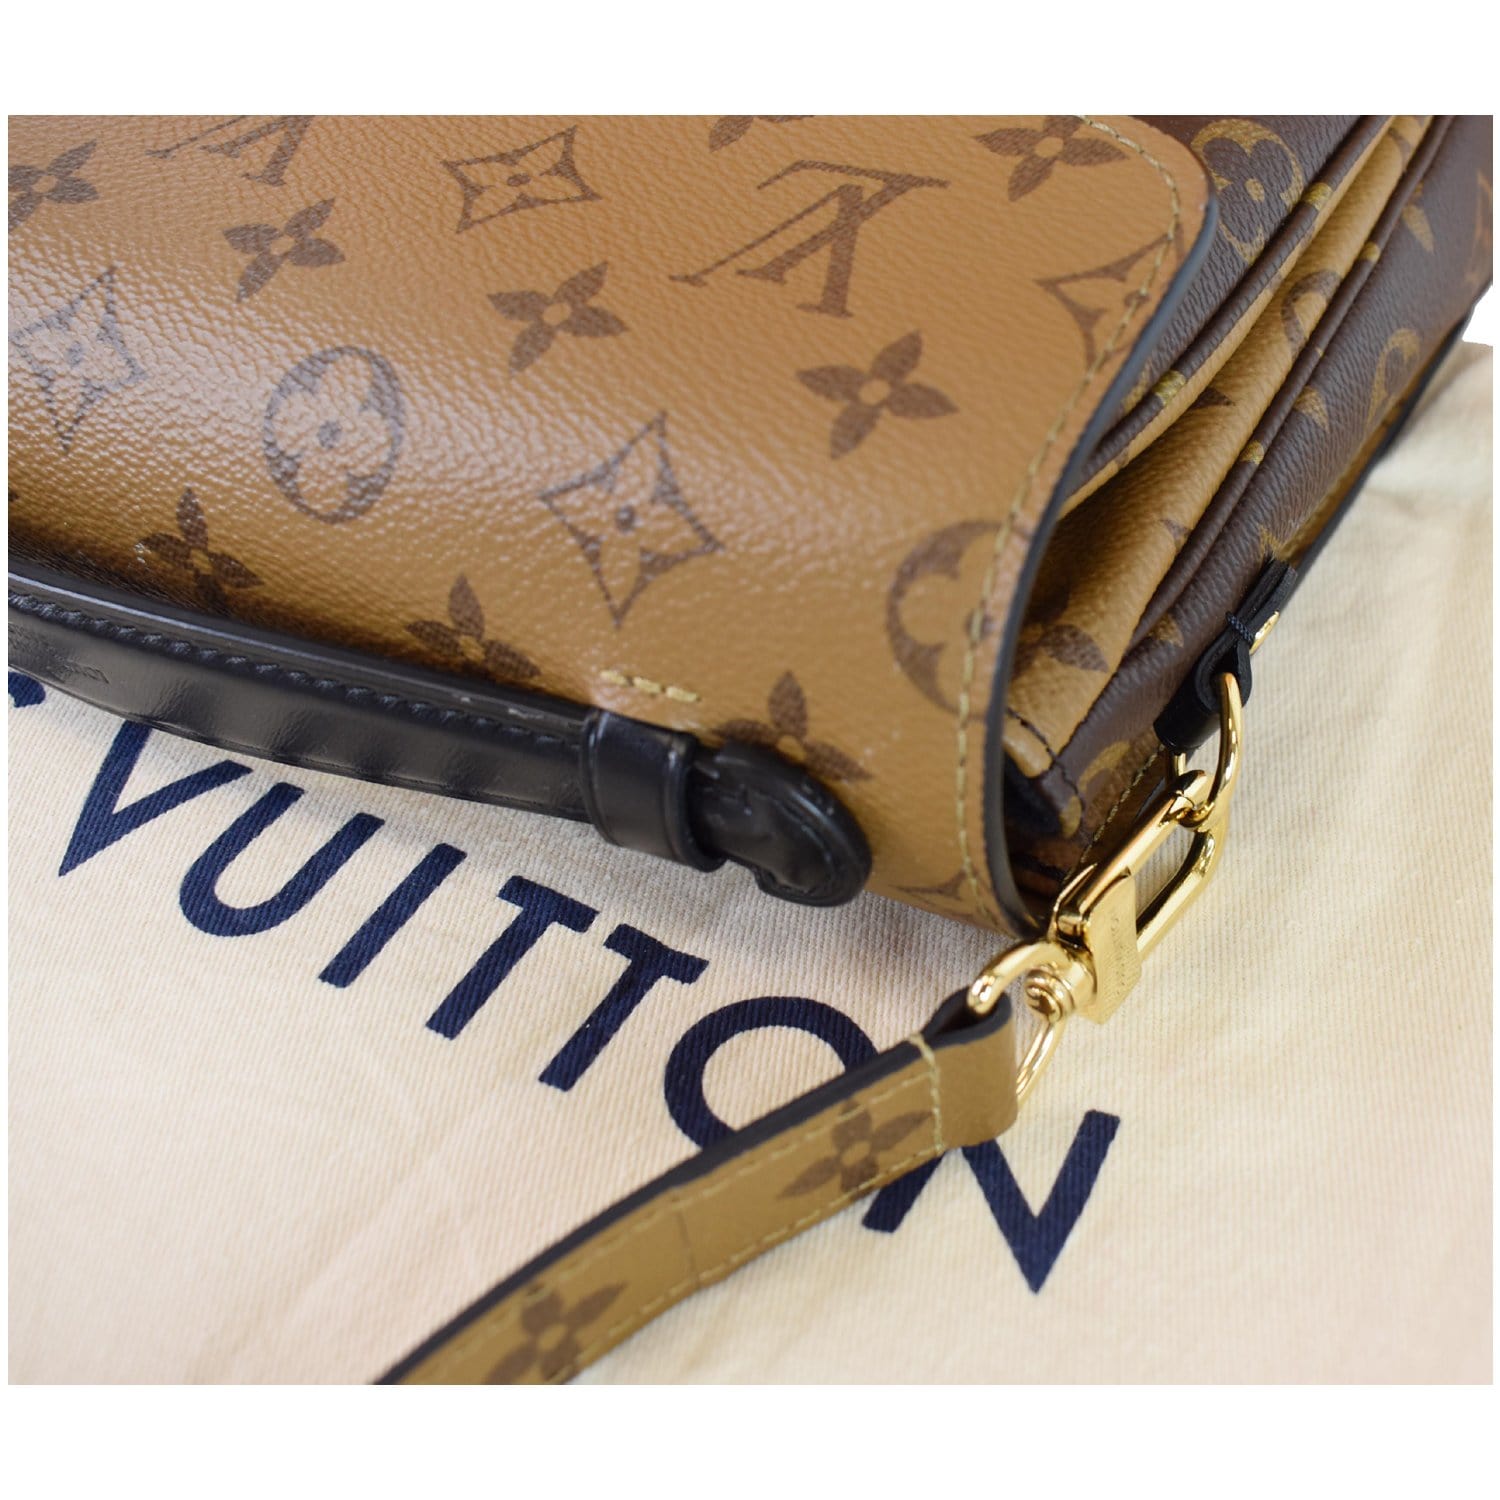 Pochette Métis Monogram Reverse in Brown - Handbags M44876, LOUIS VUITTON  ®